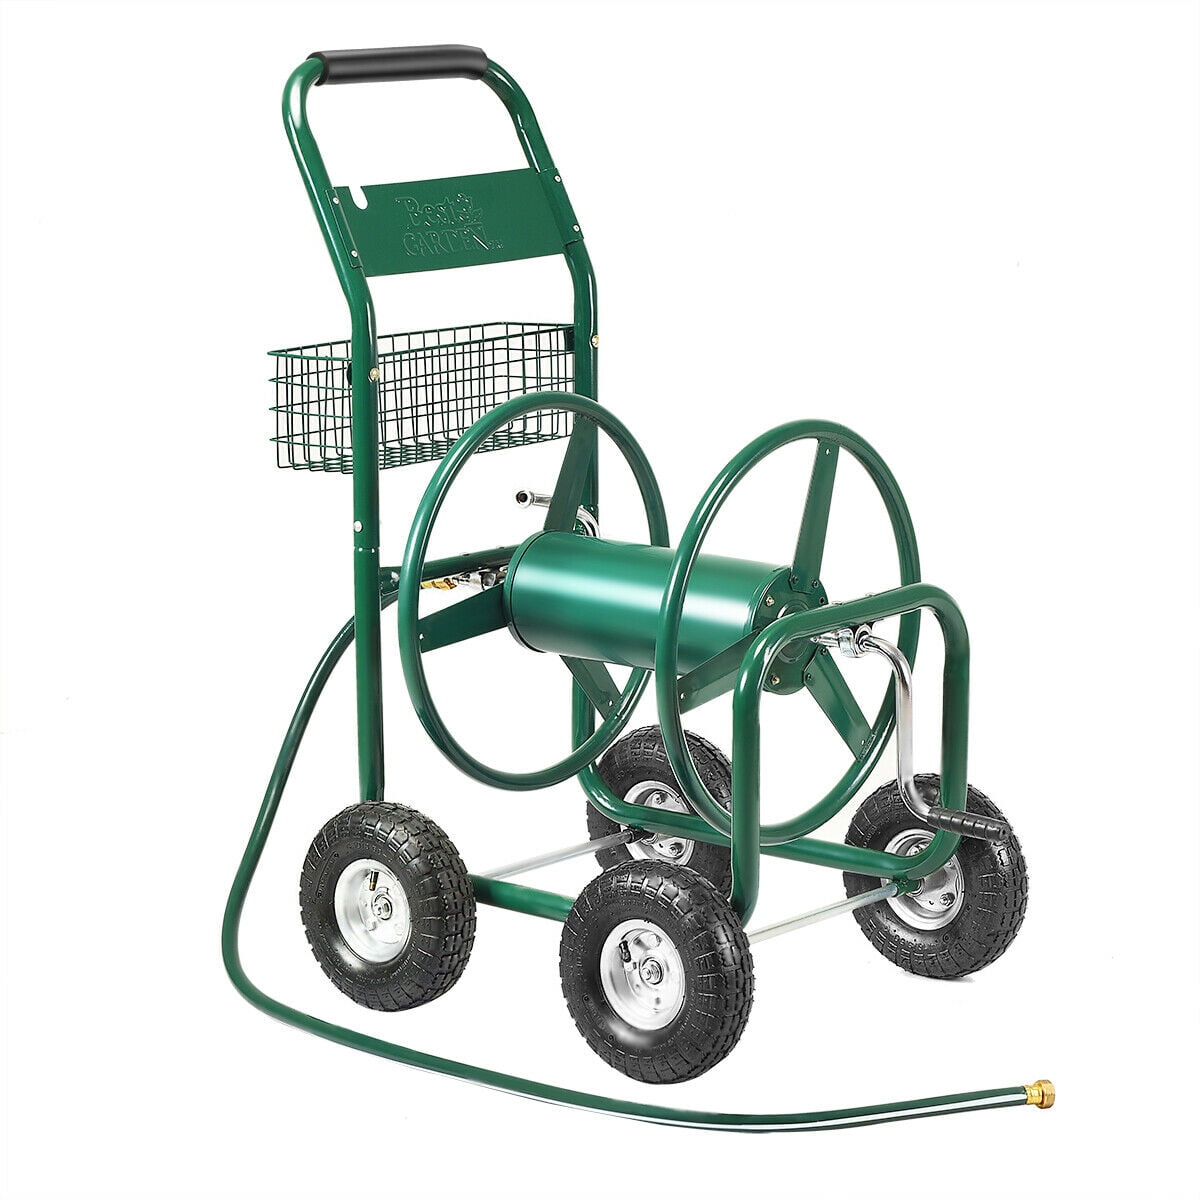 NancyYU Portable Garden Water Pipe Holder Garden Hose Reels Cart Hose Pipe Storage Holder Trolley Washing Cart with 2 Wheels 